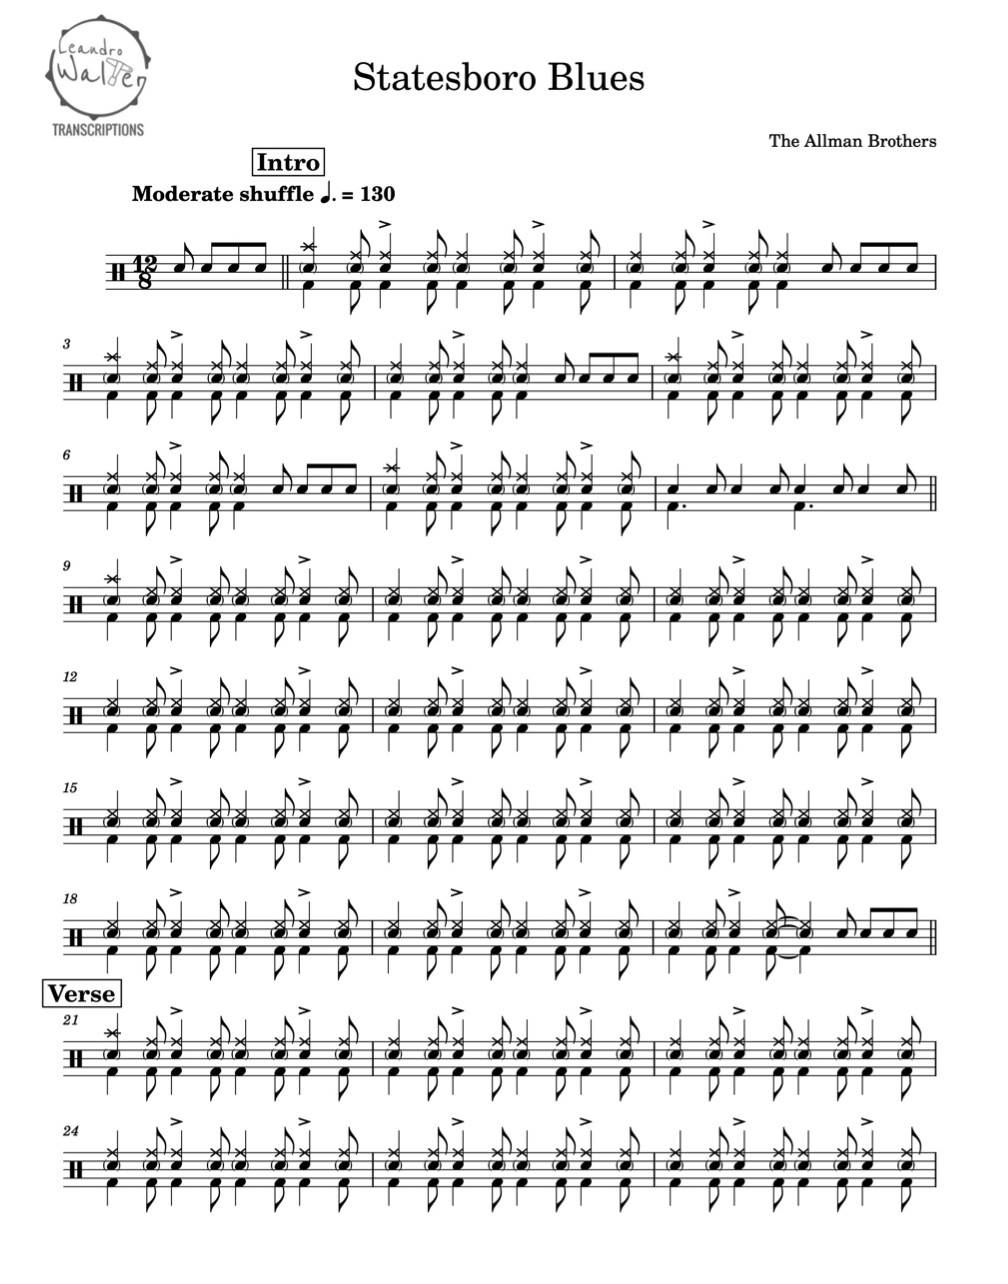 Statesboro Blues - The Allman Brothers Band - Full Drum Transcription / Drum Sheet Music - Percunerds Transcriptions